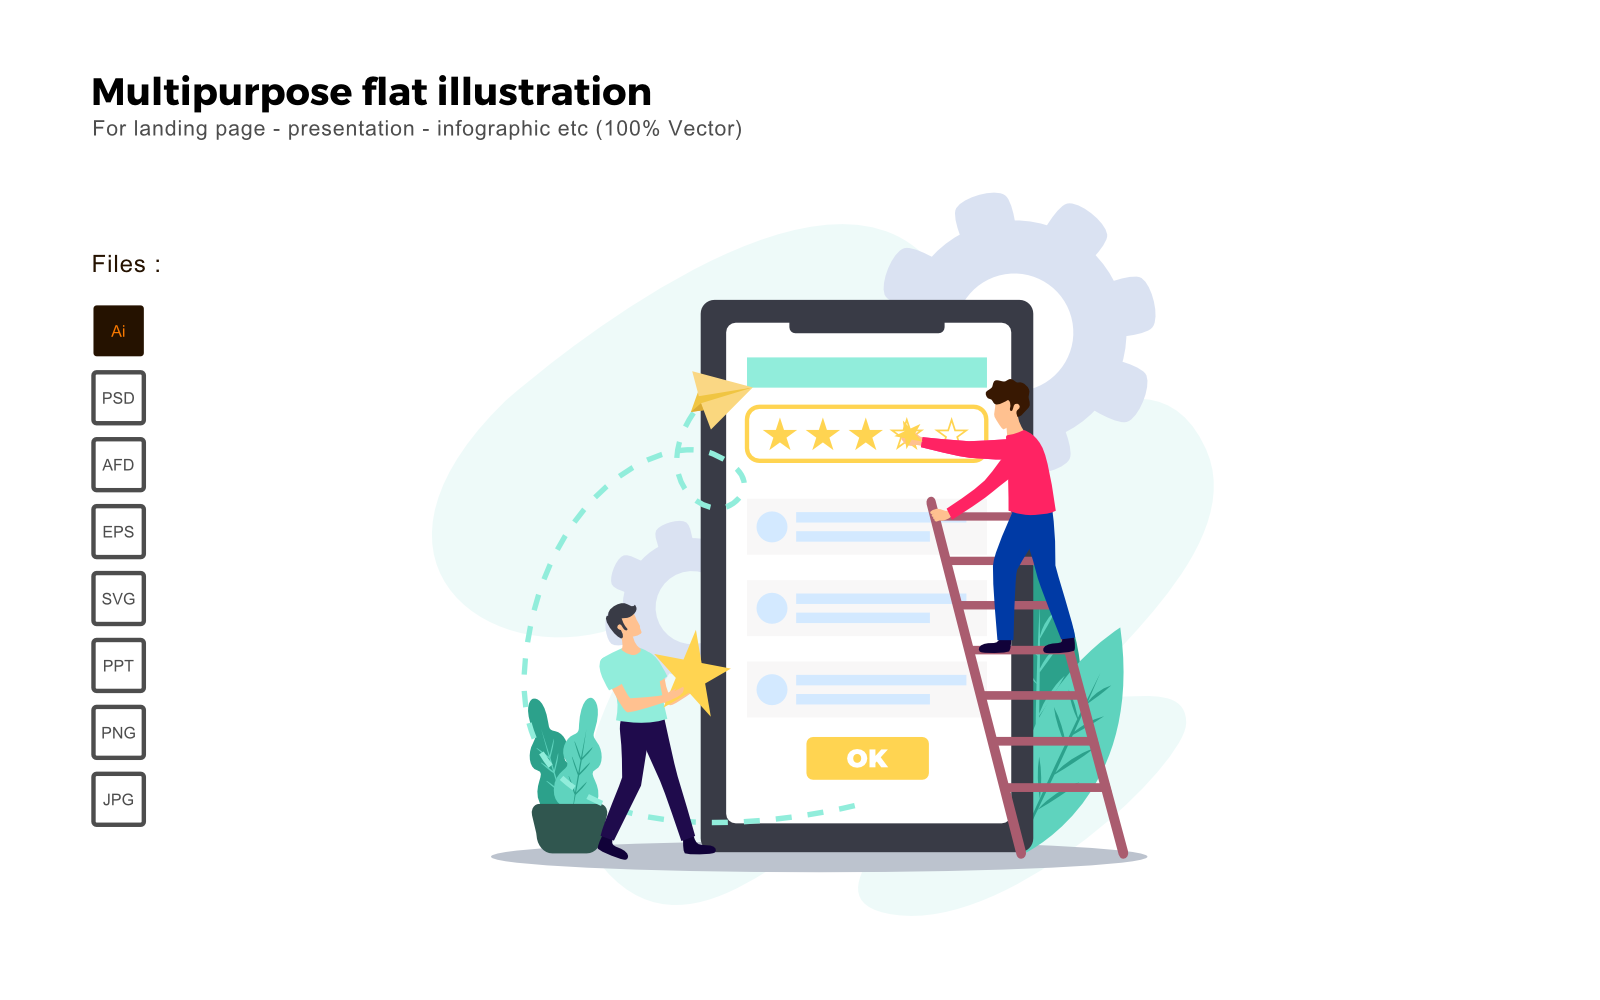 Multipurpose Flat Illustration User Interface - Vector Image